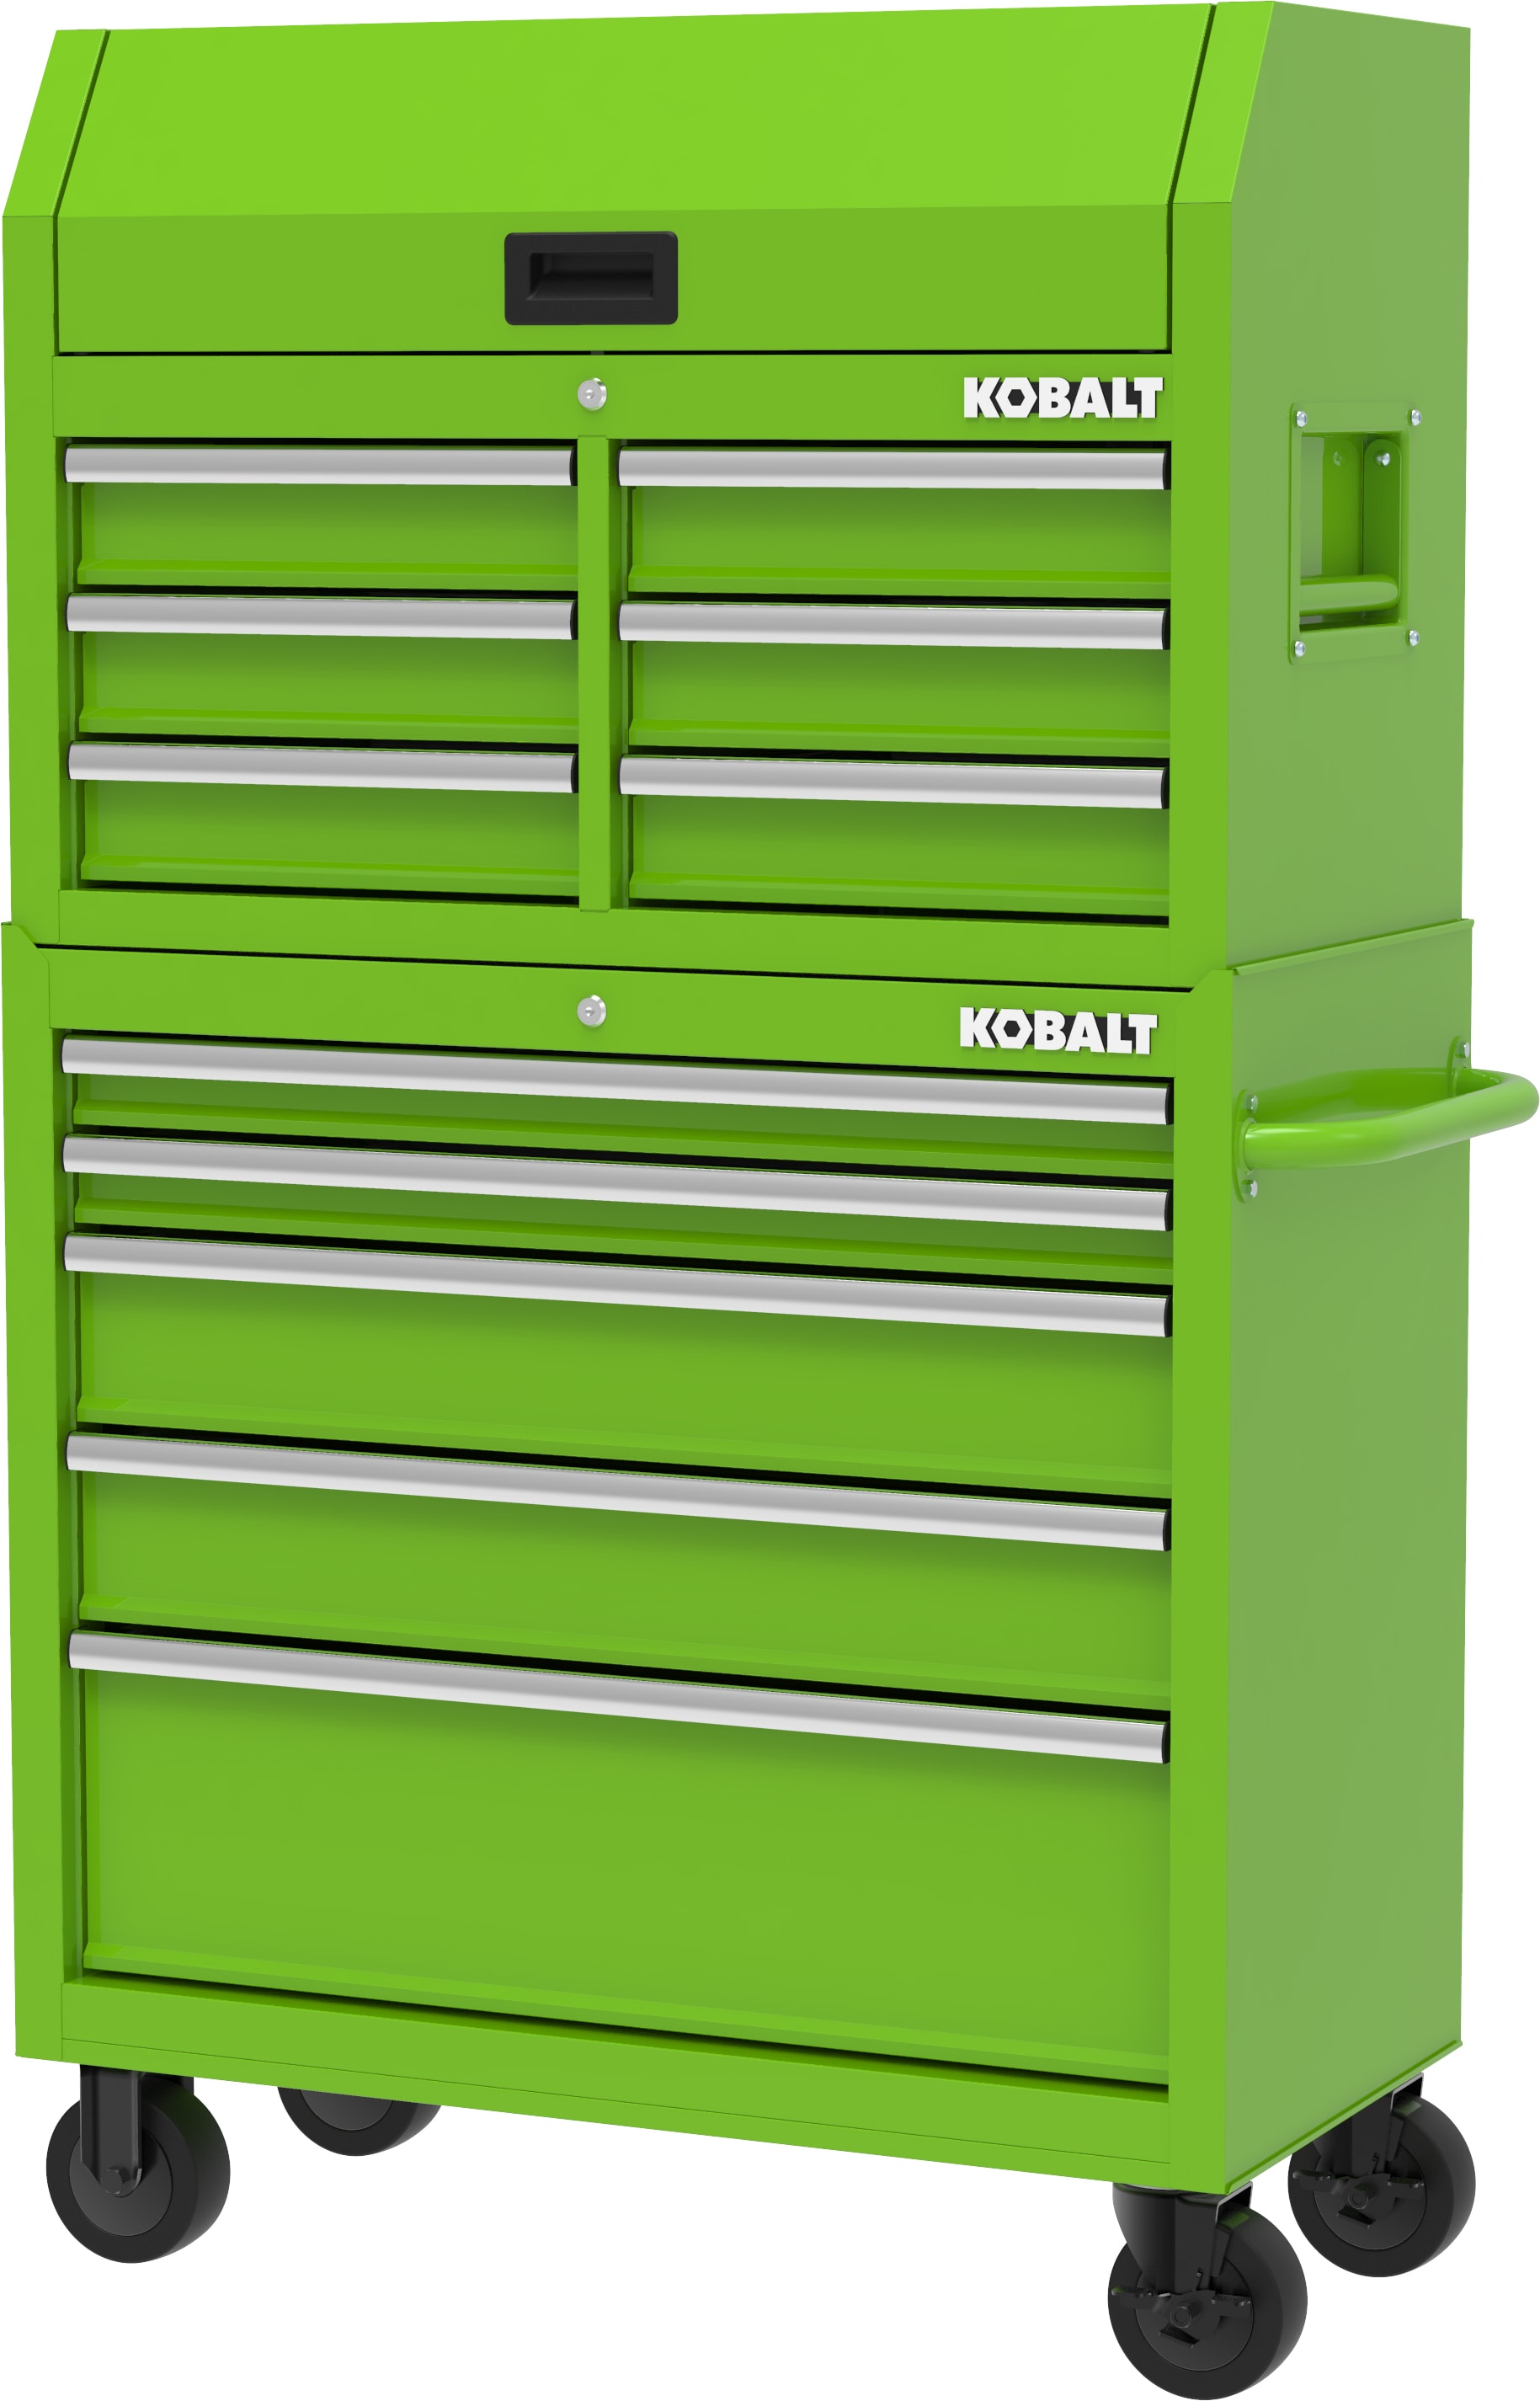 Kobalt Green Mini Tool box - Tool Boxes, Belts & Storage - Cherry Hill, New  Jersey, Facebook Marketplace